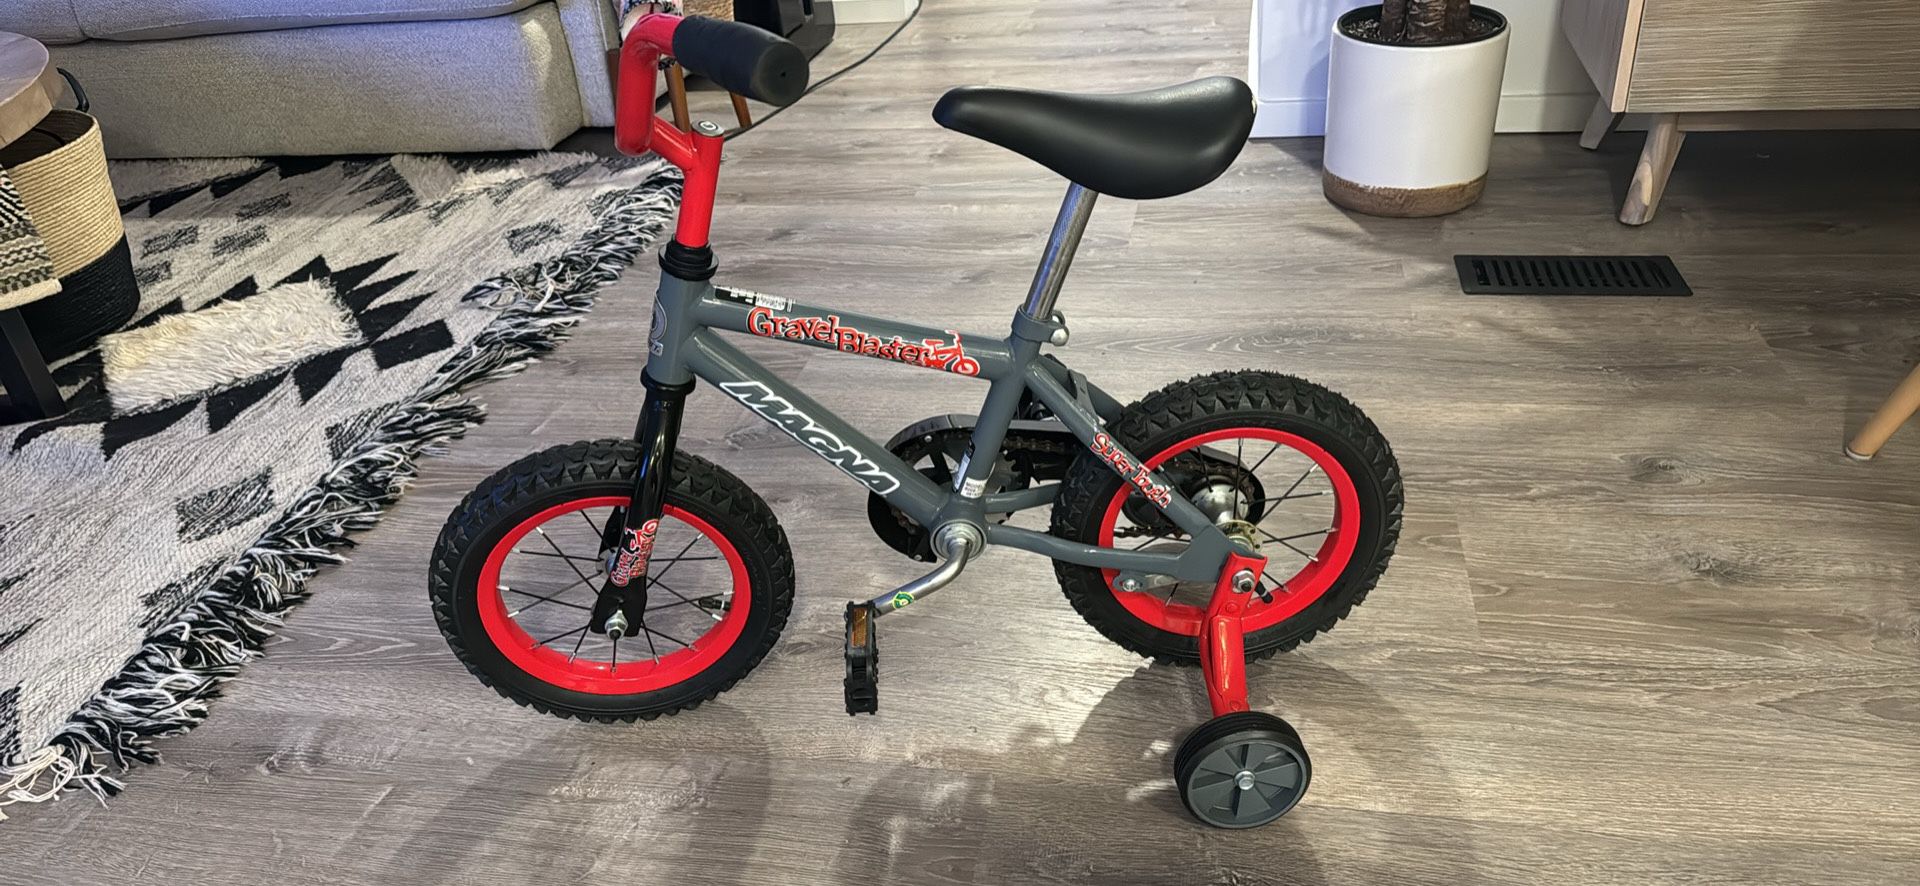 New Kids / Toddler bike with Training Wheels sprew nubs still on wheels 12”